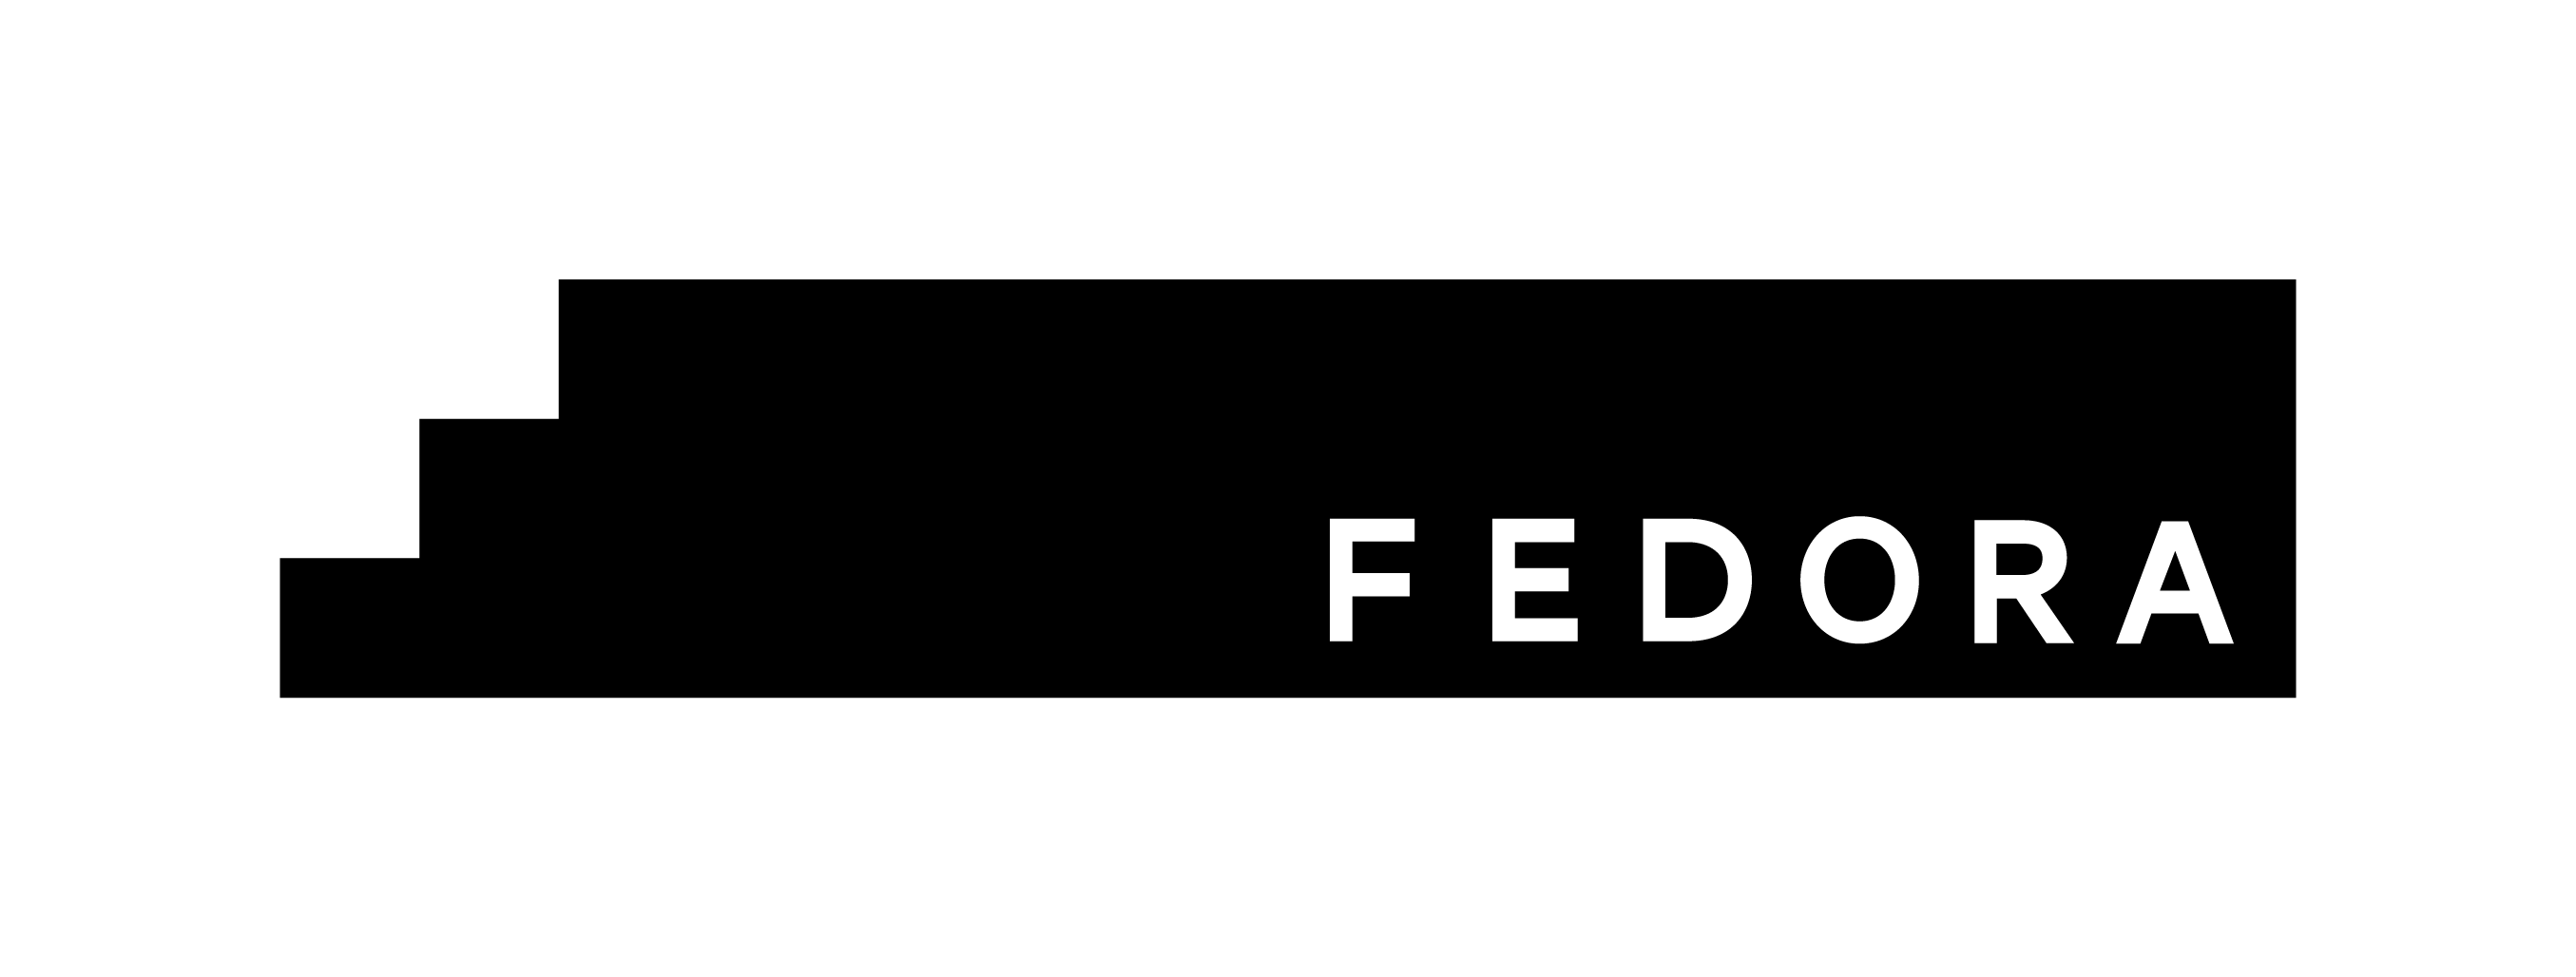 Fedora Logotype Positif